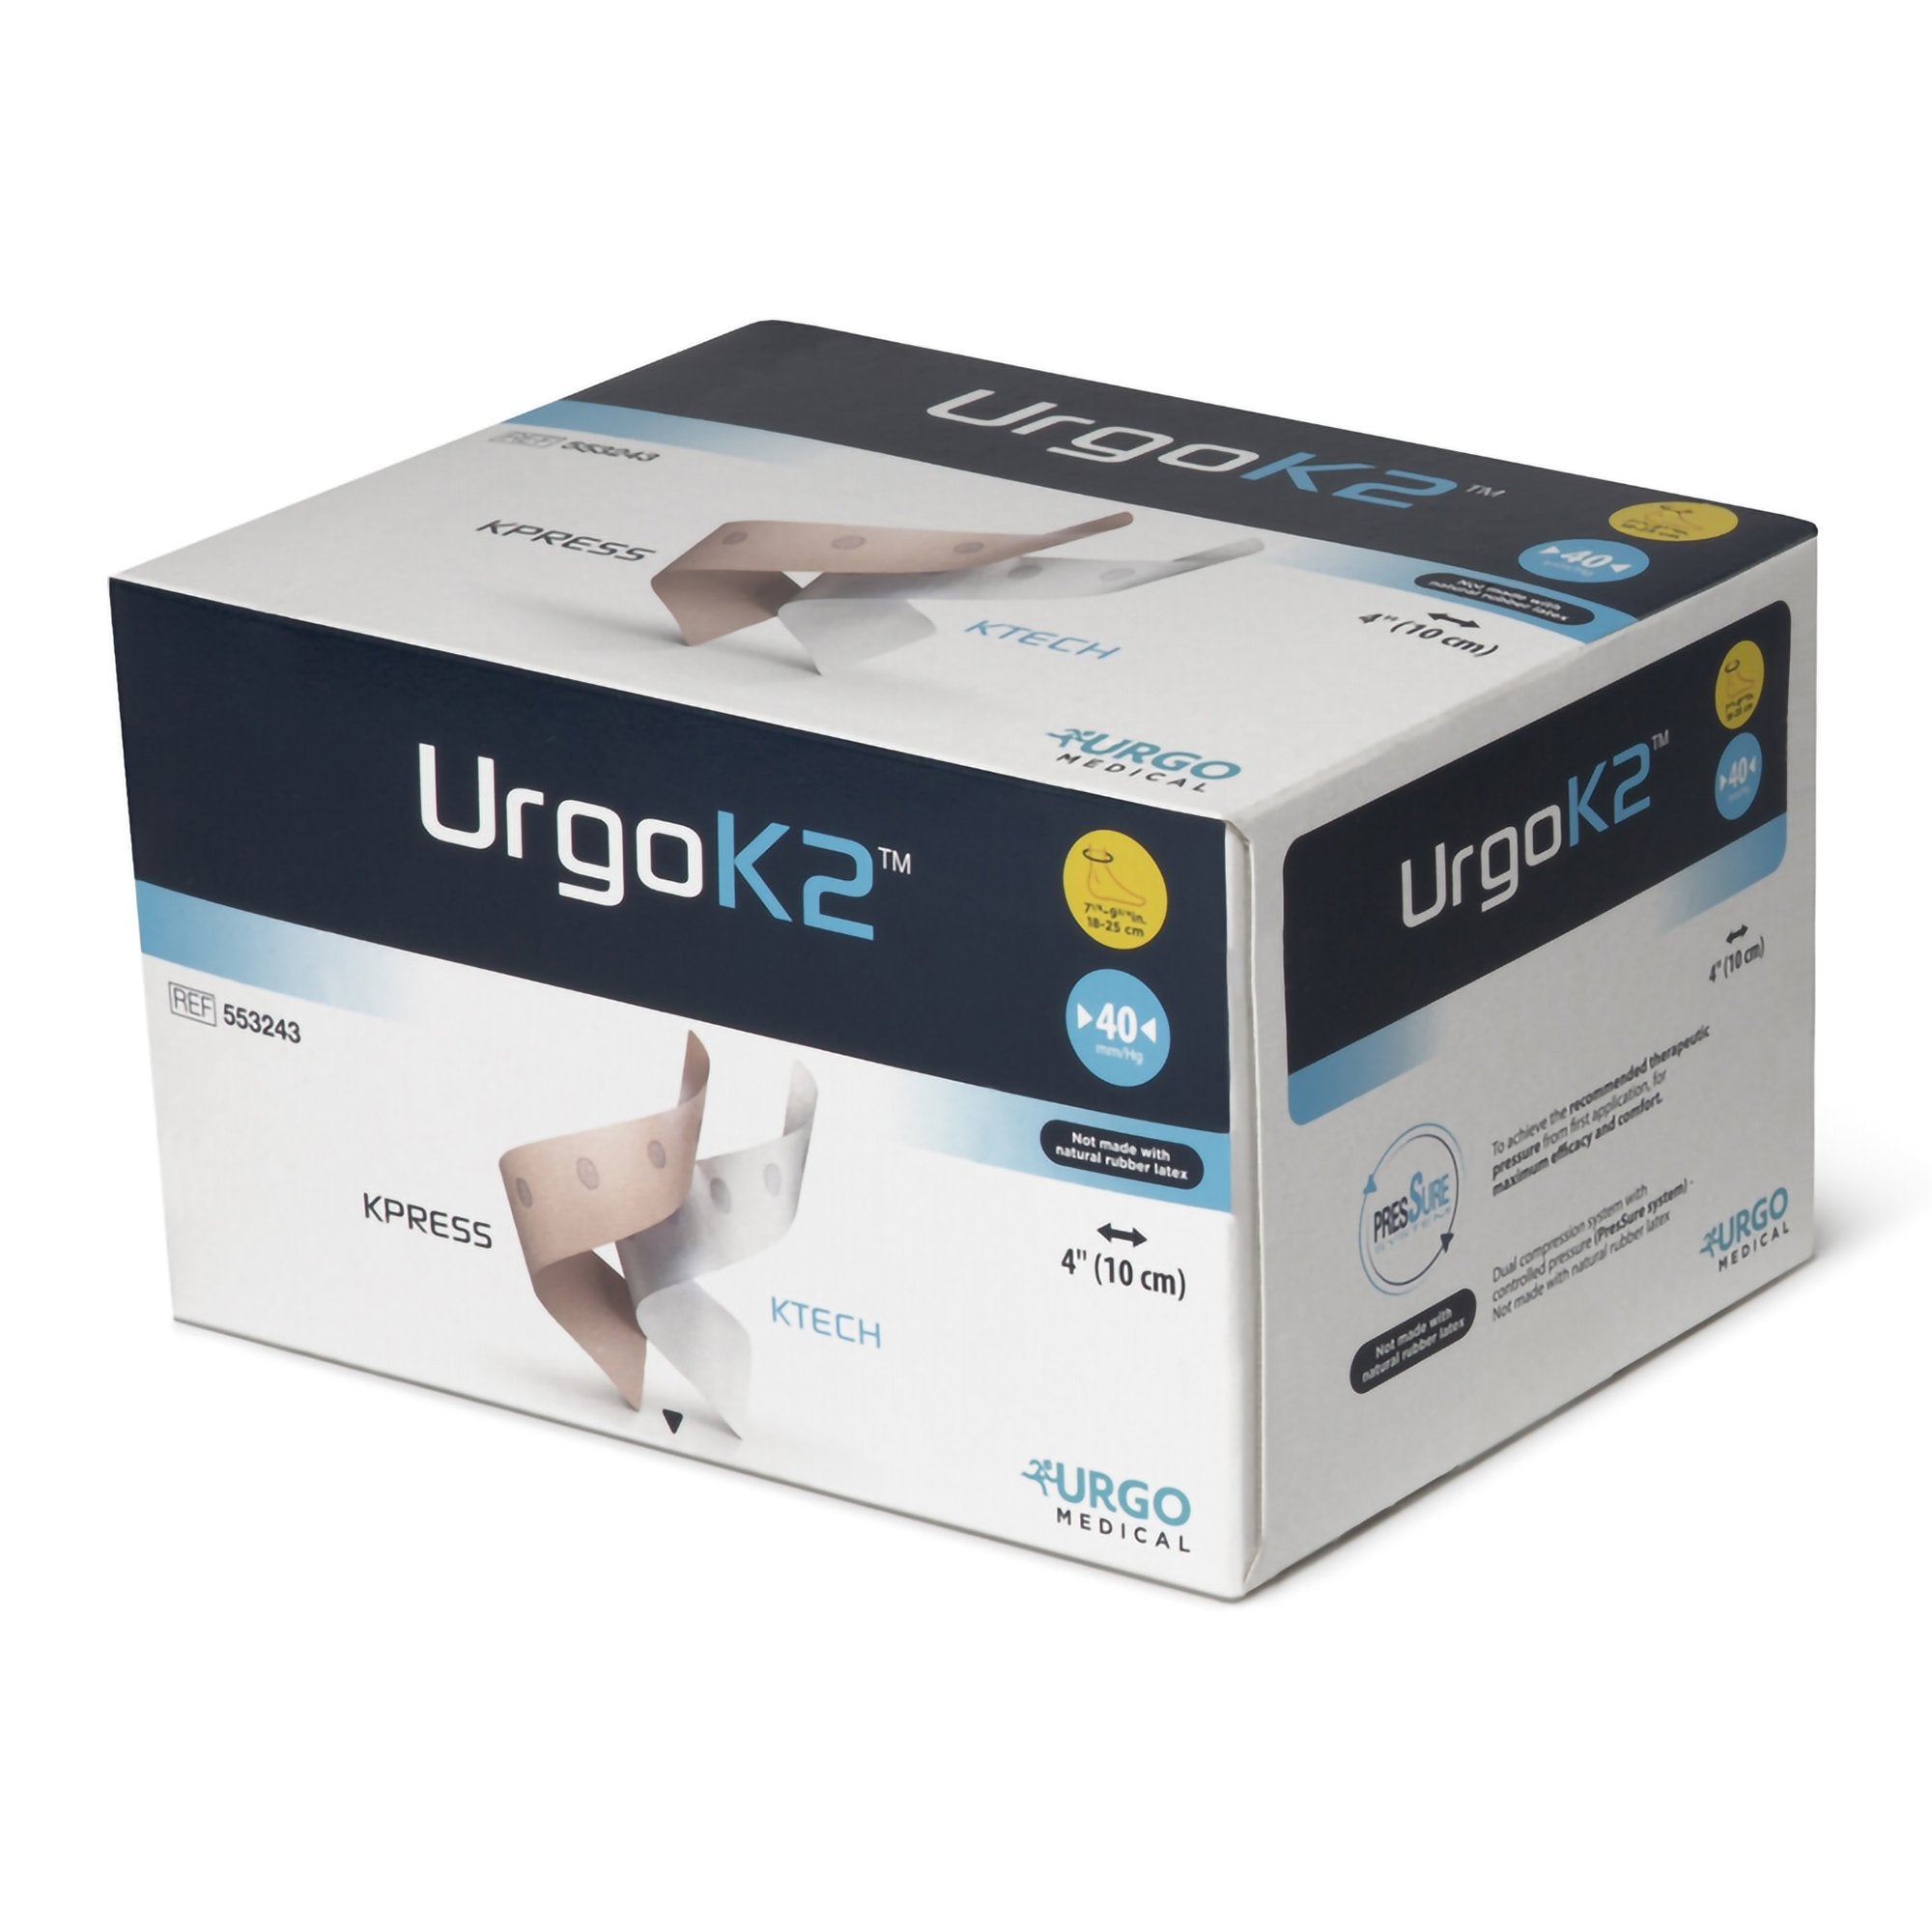 2 Layer Compression Bandage System URGOK2™ 4 X 7-1/8 to 9-3/4 Inch Self-Adherent Closure Tan / White NonSterile Regular 40 mmHg